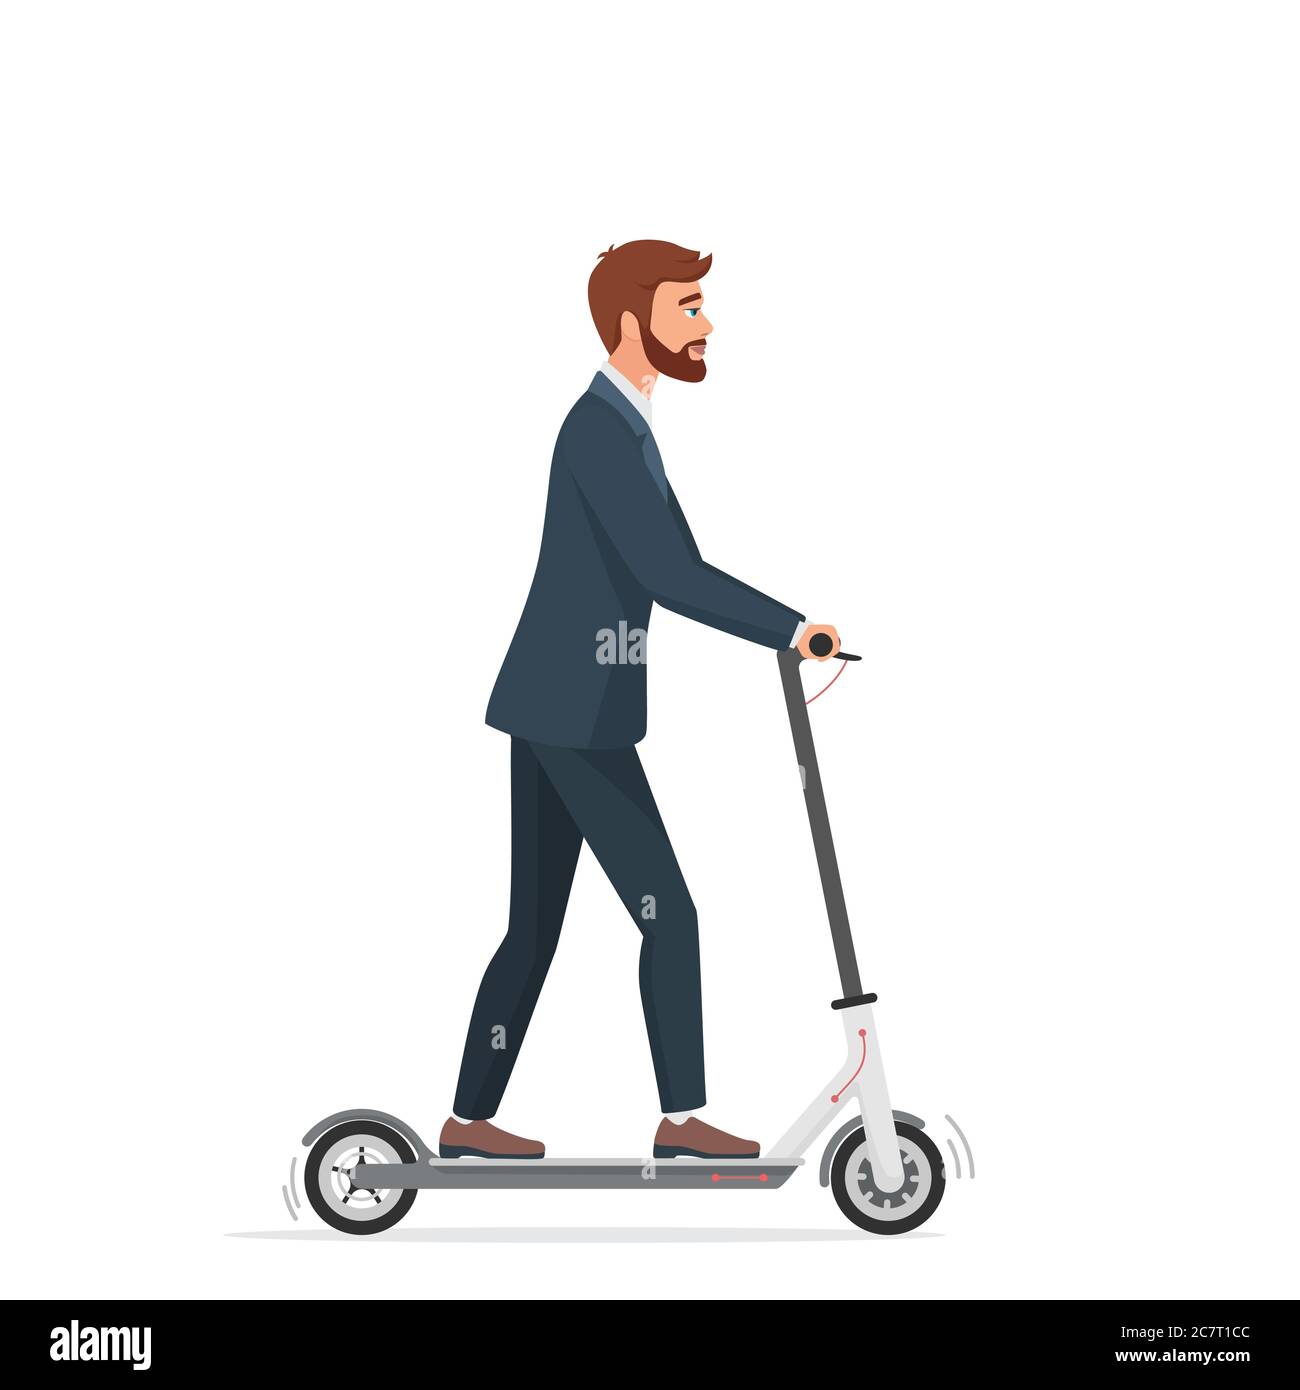 Hombre en scooter eléctrico plano vector ilustración. Hombre de carácter de  dibujos animados montar ecológicamente limpio vehículo urbano. Chico en  traje usando un transportador personal moderno. Hombre de negocios en e- scooter va